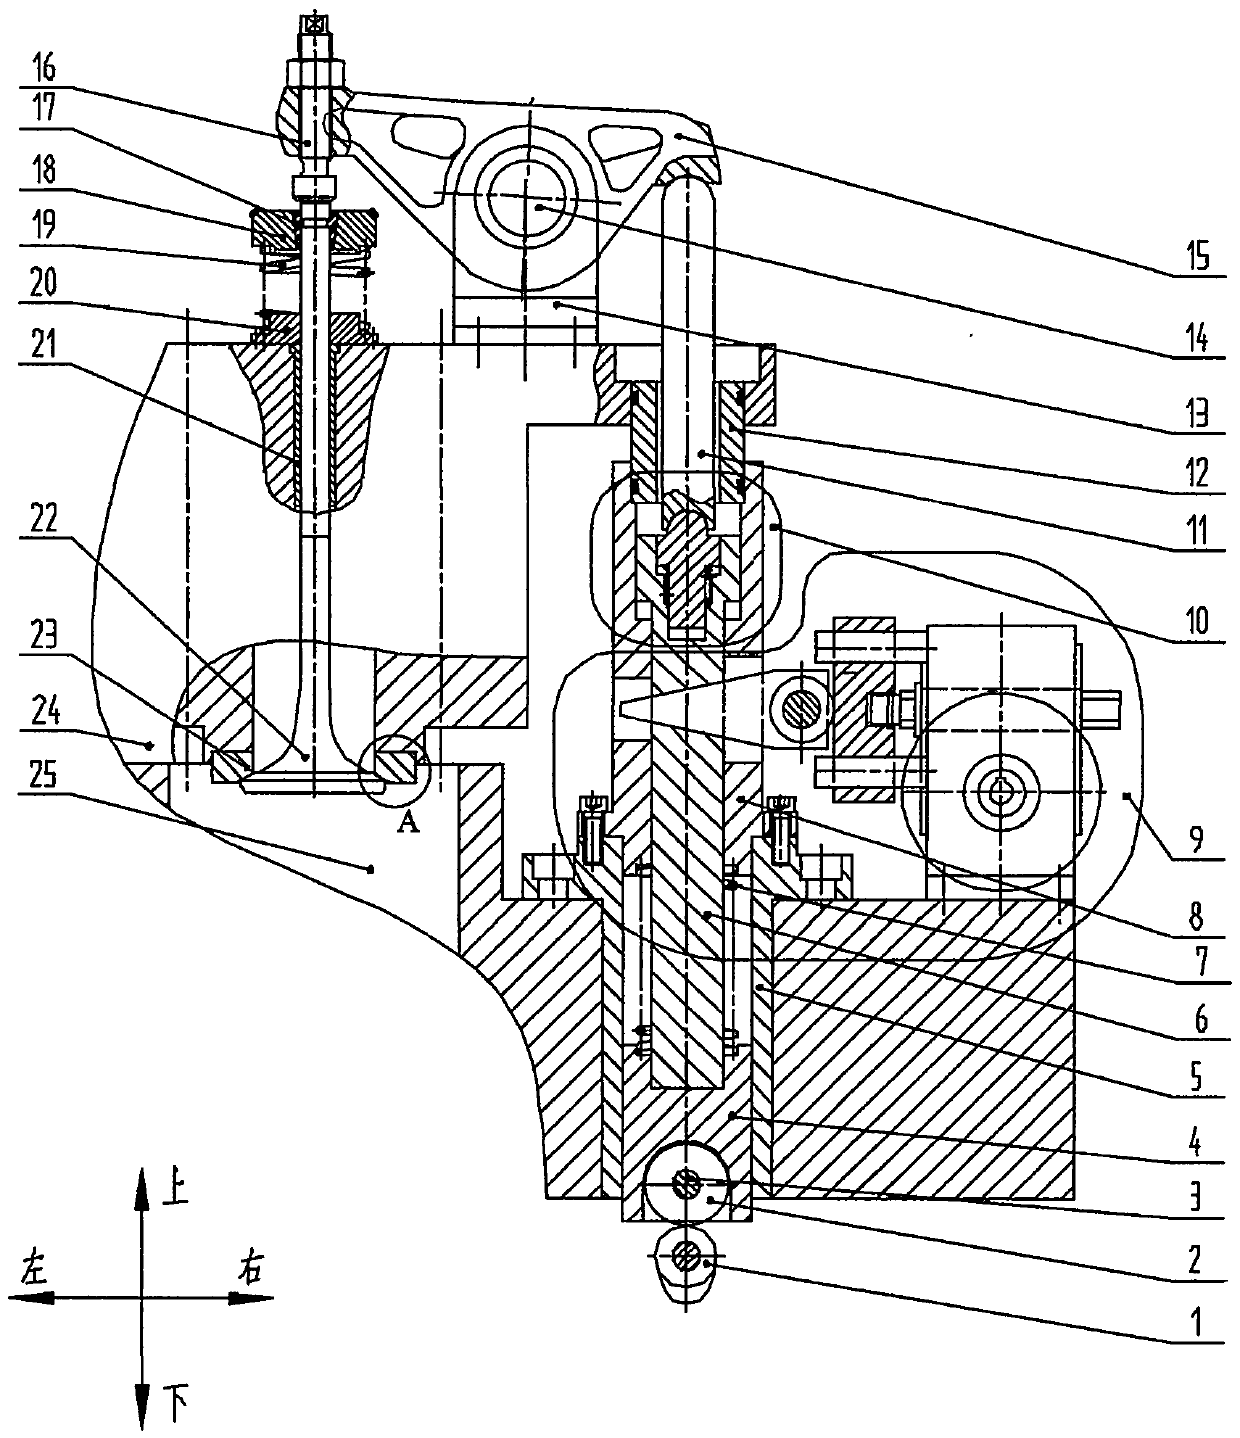 Internal combustion engine hydraulic valve lift adjustment buffer device